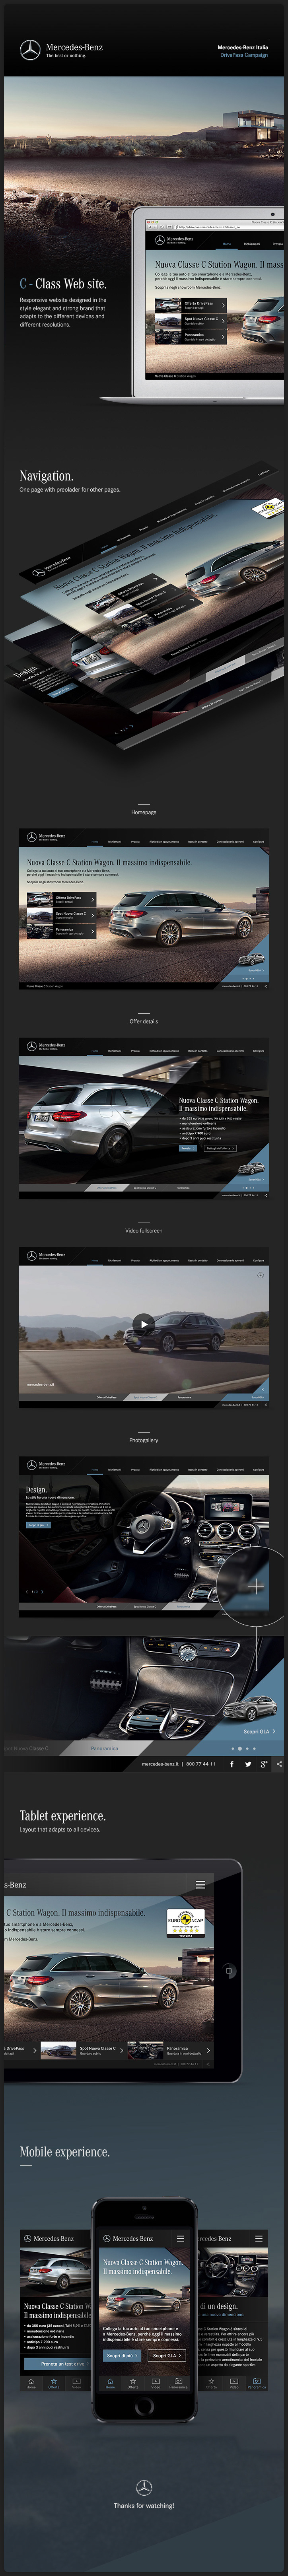 mercedes-benz mercedes automotive   Website Web app mobile tablet apple design graphic iphone Responsive landing page landing